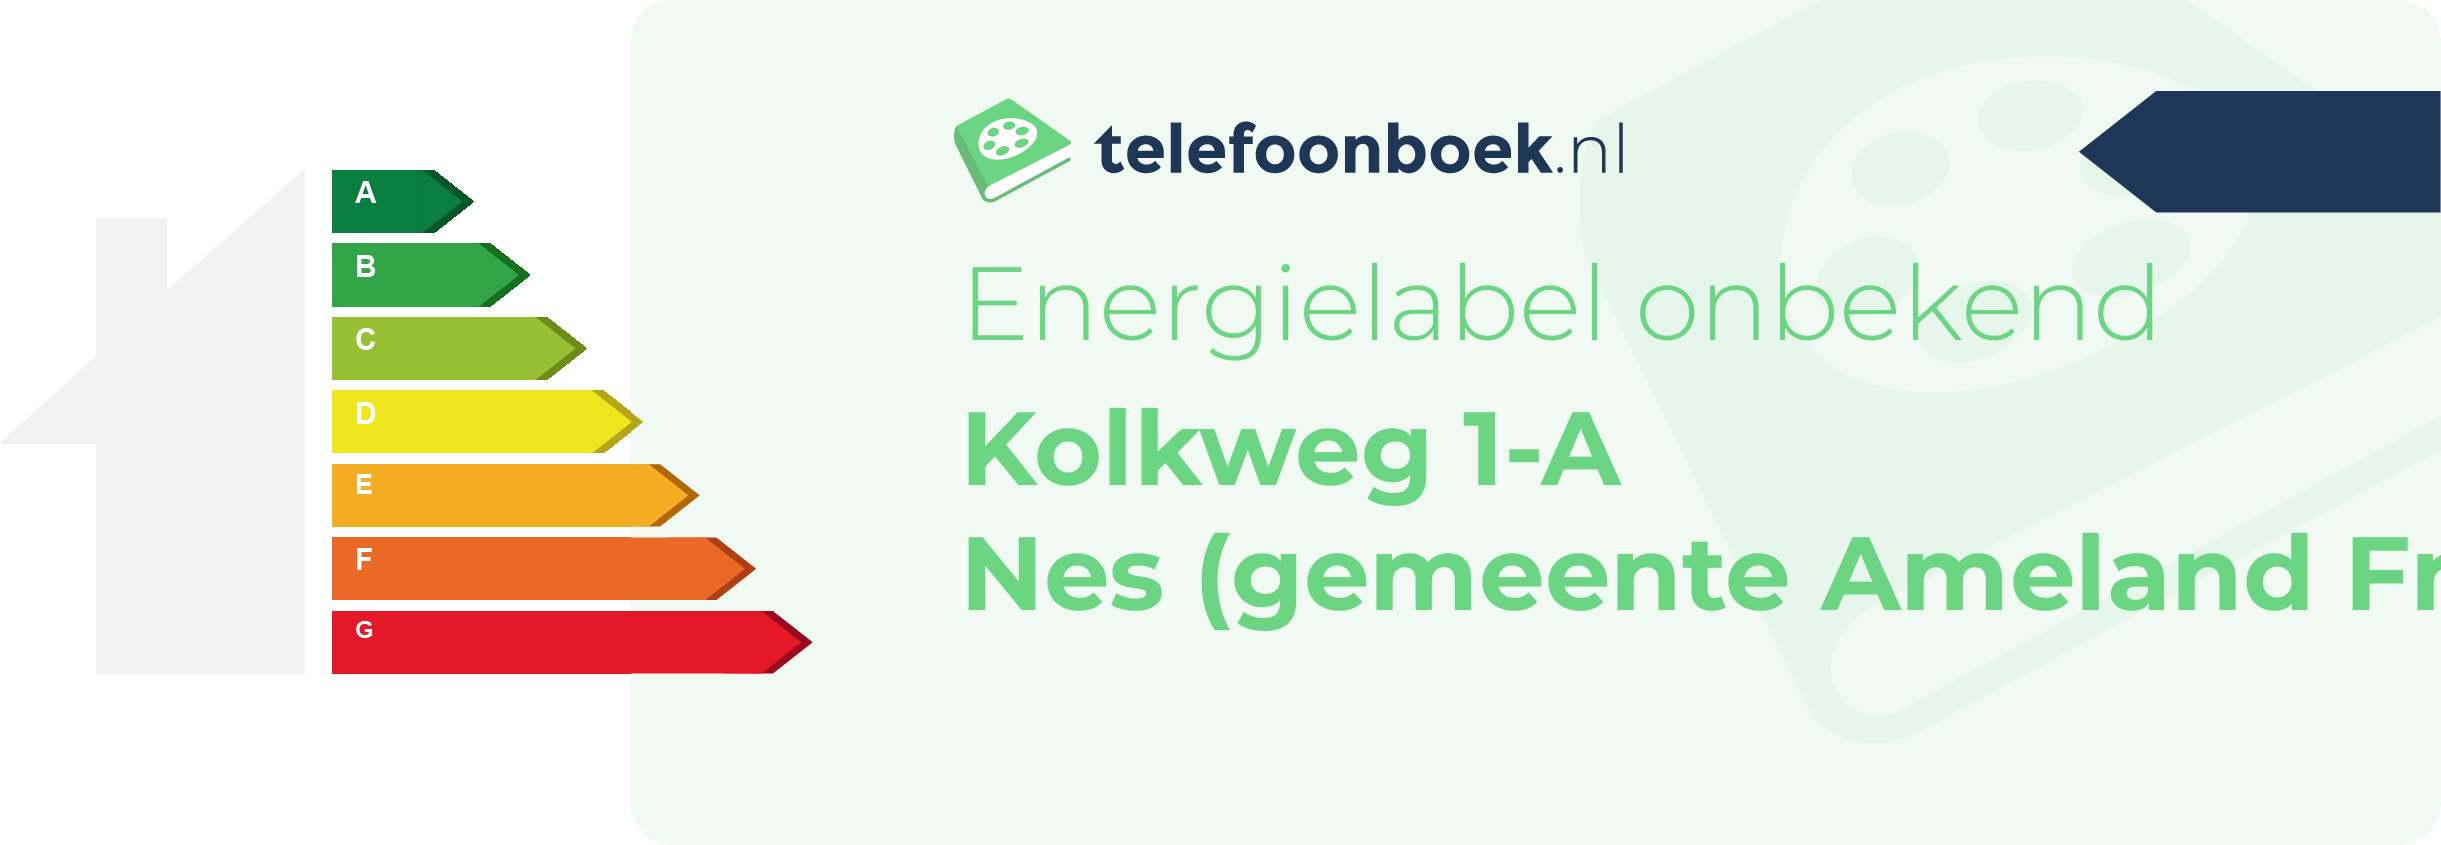 Energielabel Kolkweg 1-A Nes (gemeente Ameland Friesland)